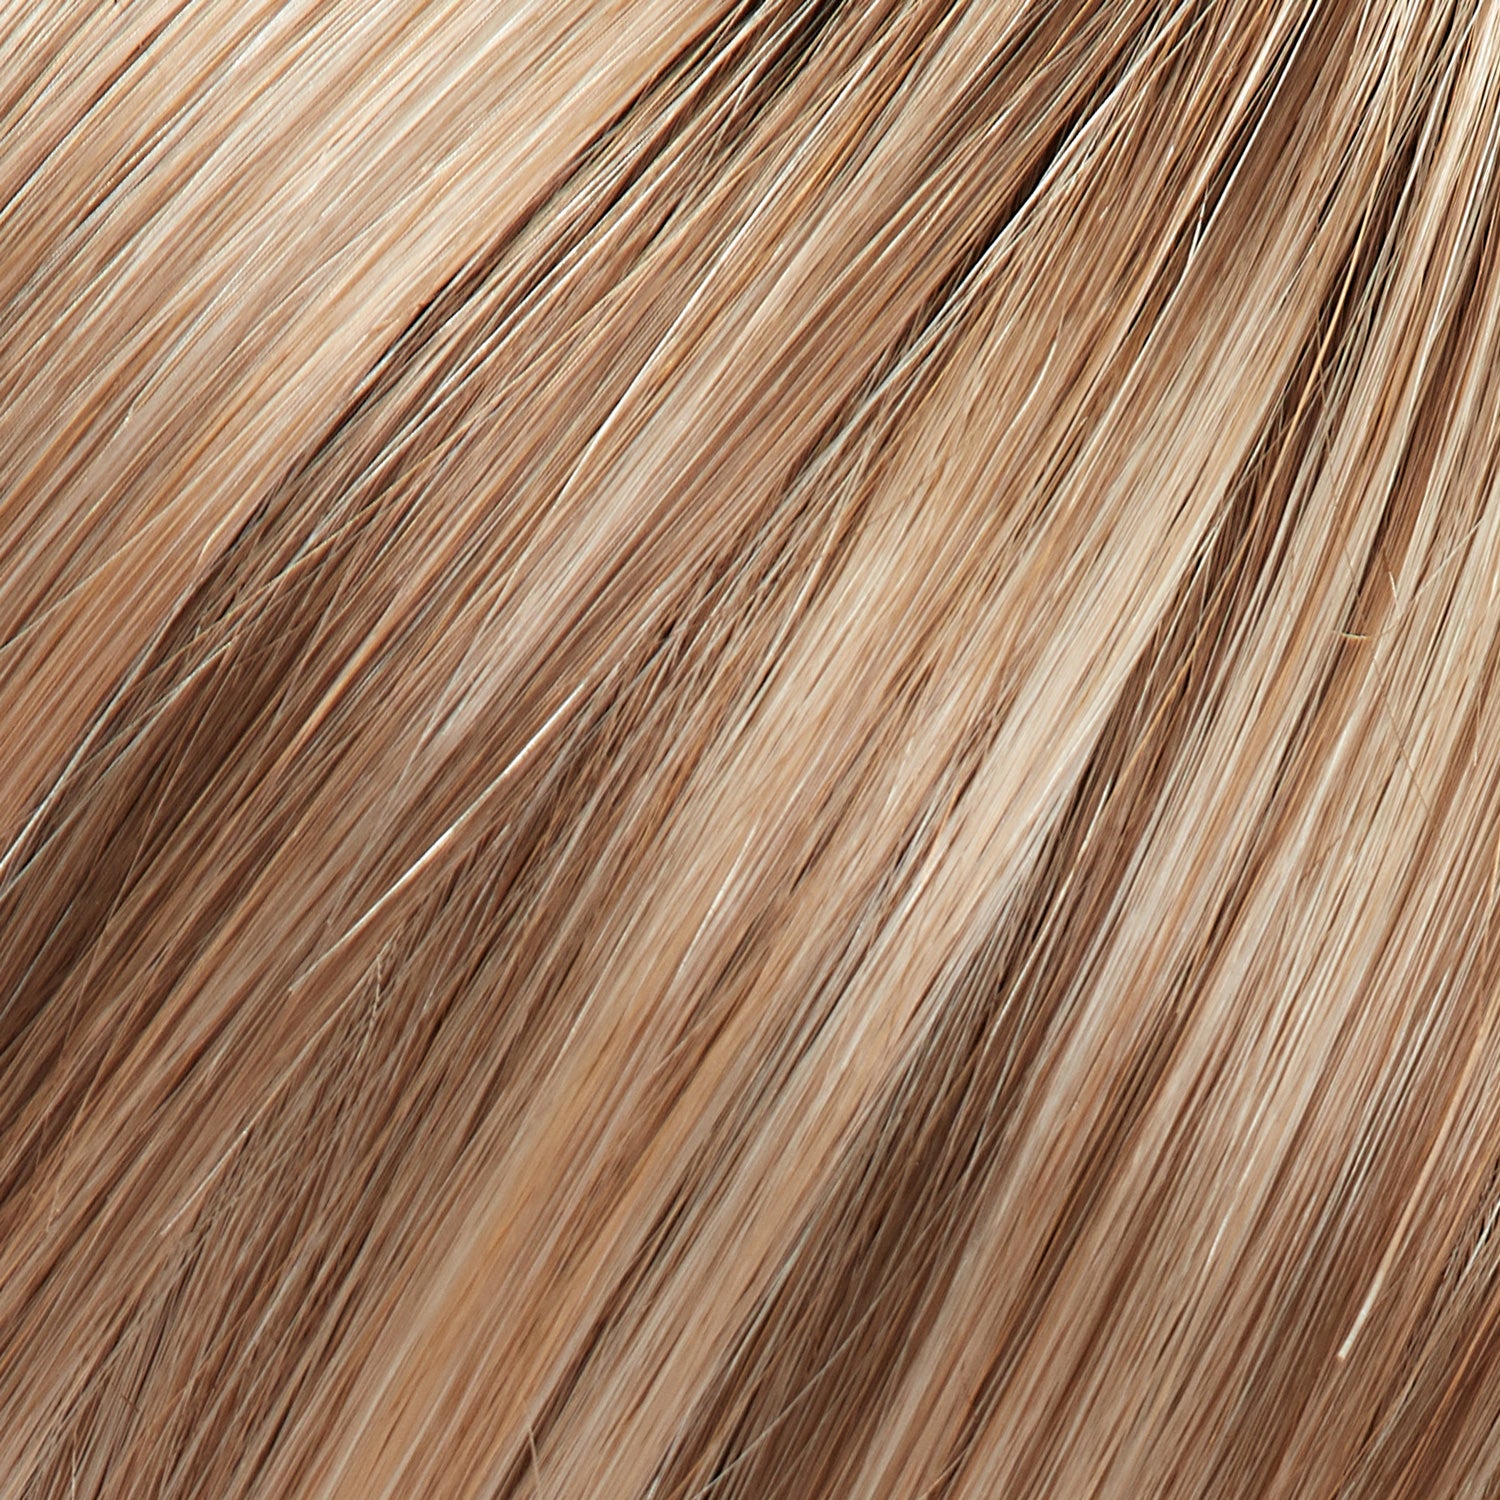 Perruque Cheveux Blonds Synthetiques Jon Renau Zara Couleur Malibu 12fs12